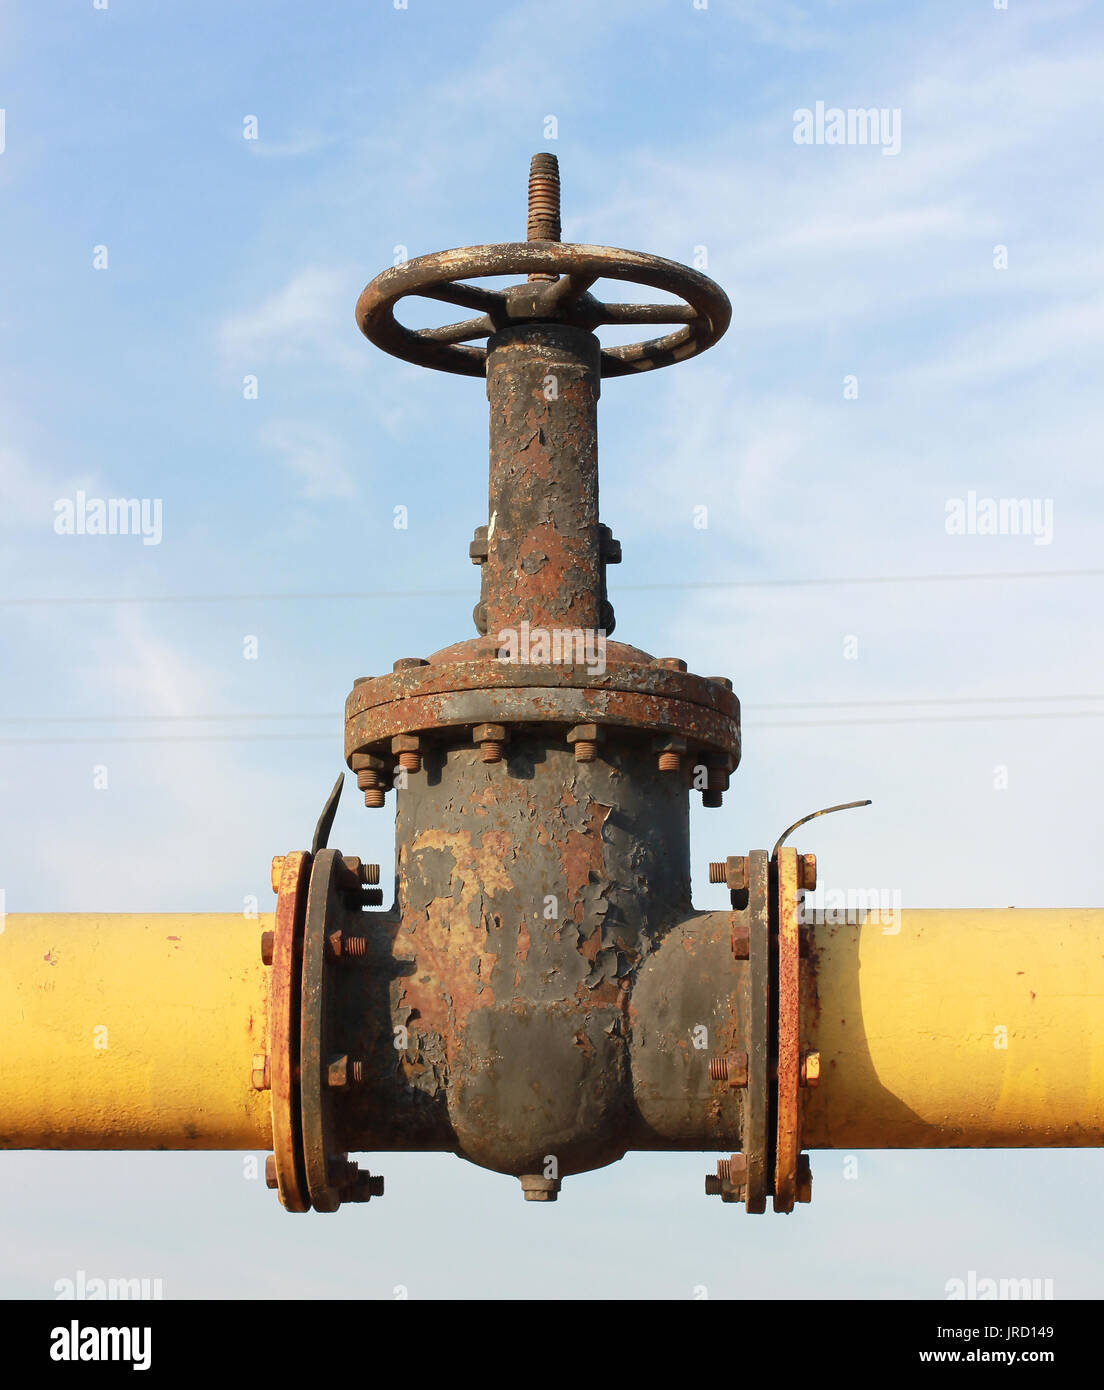 gas pipe valve Stock Photo